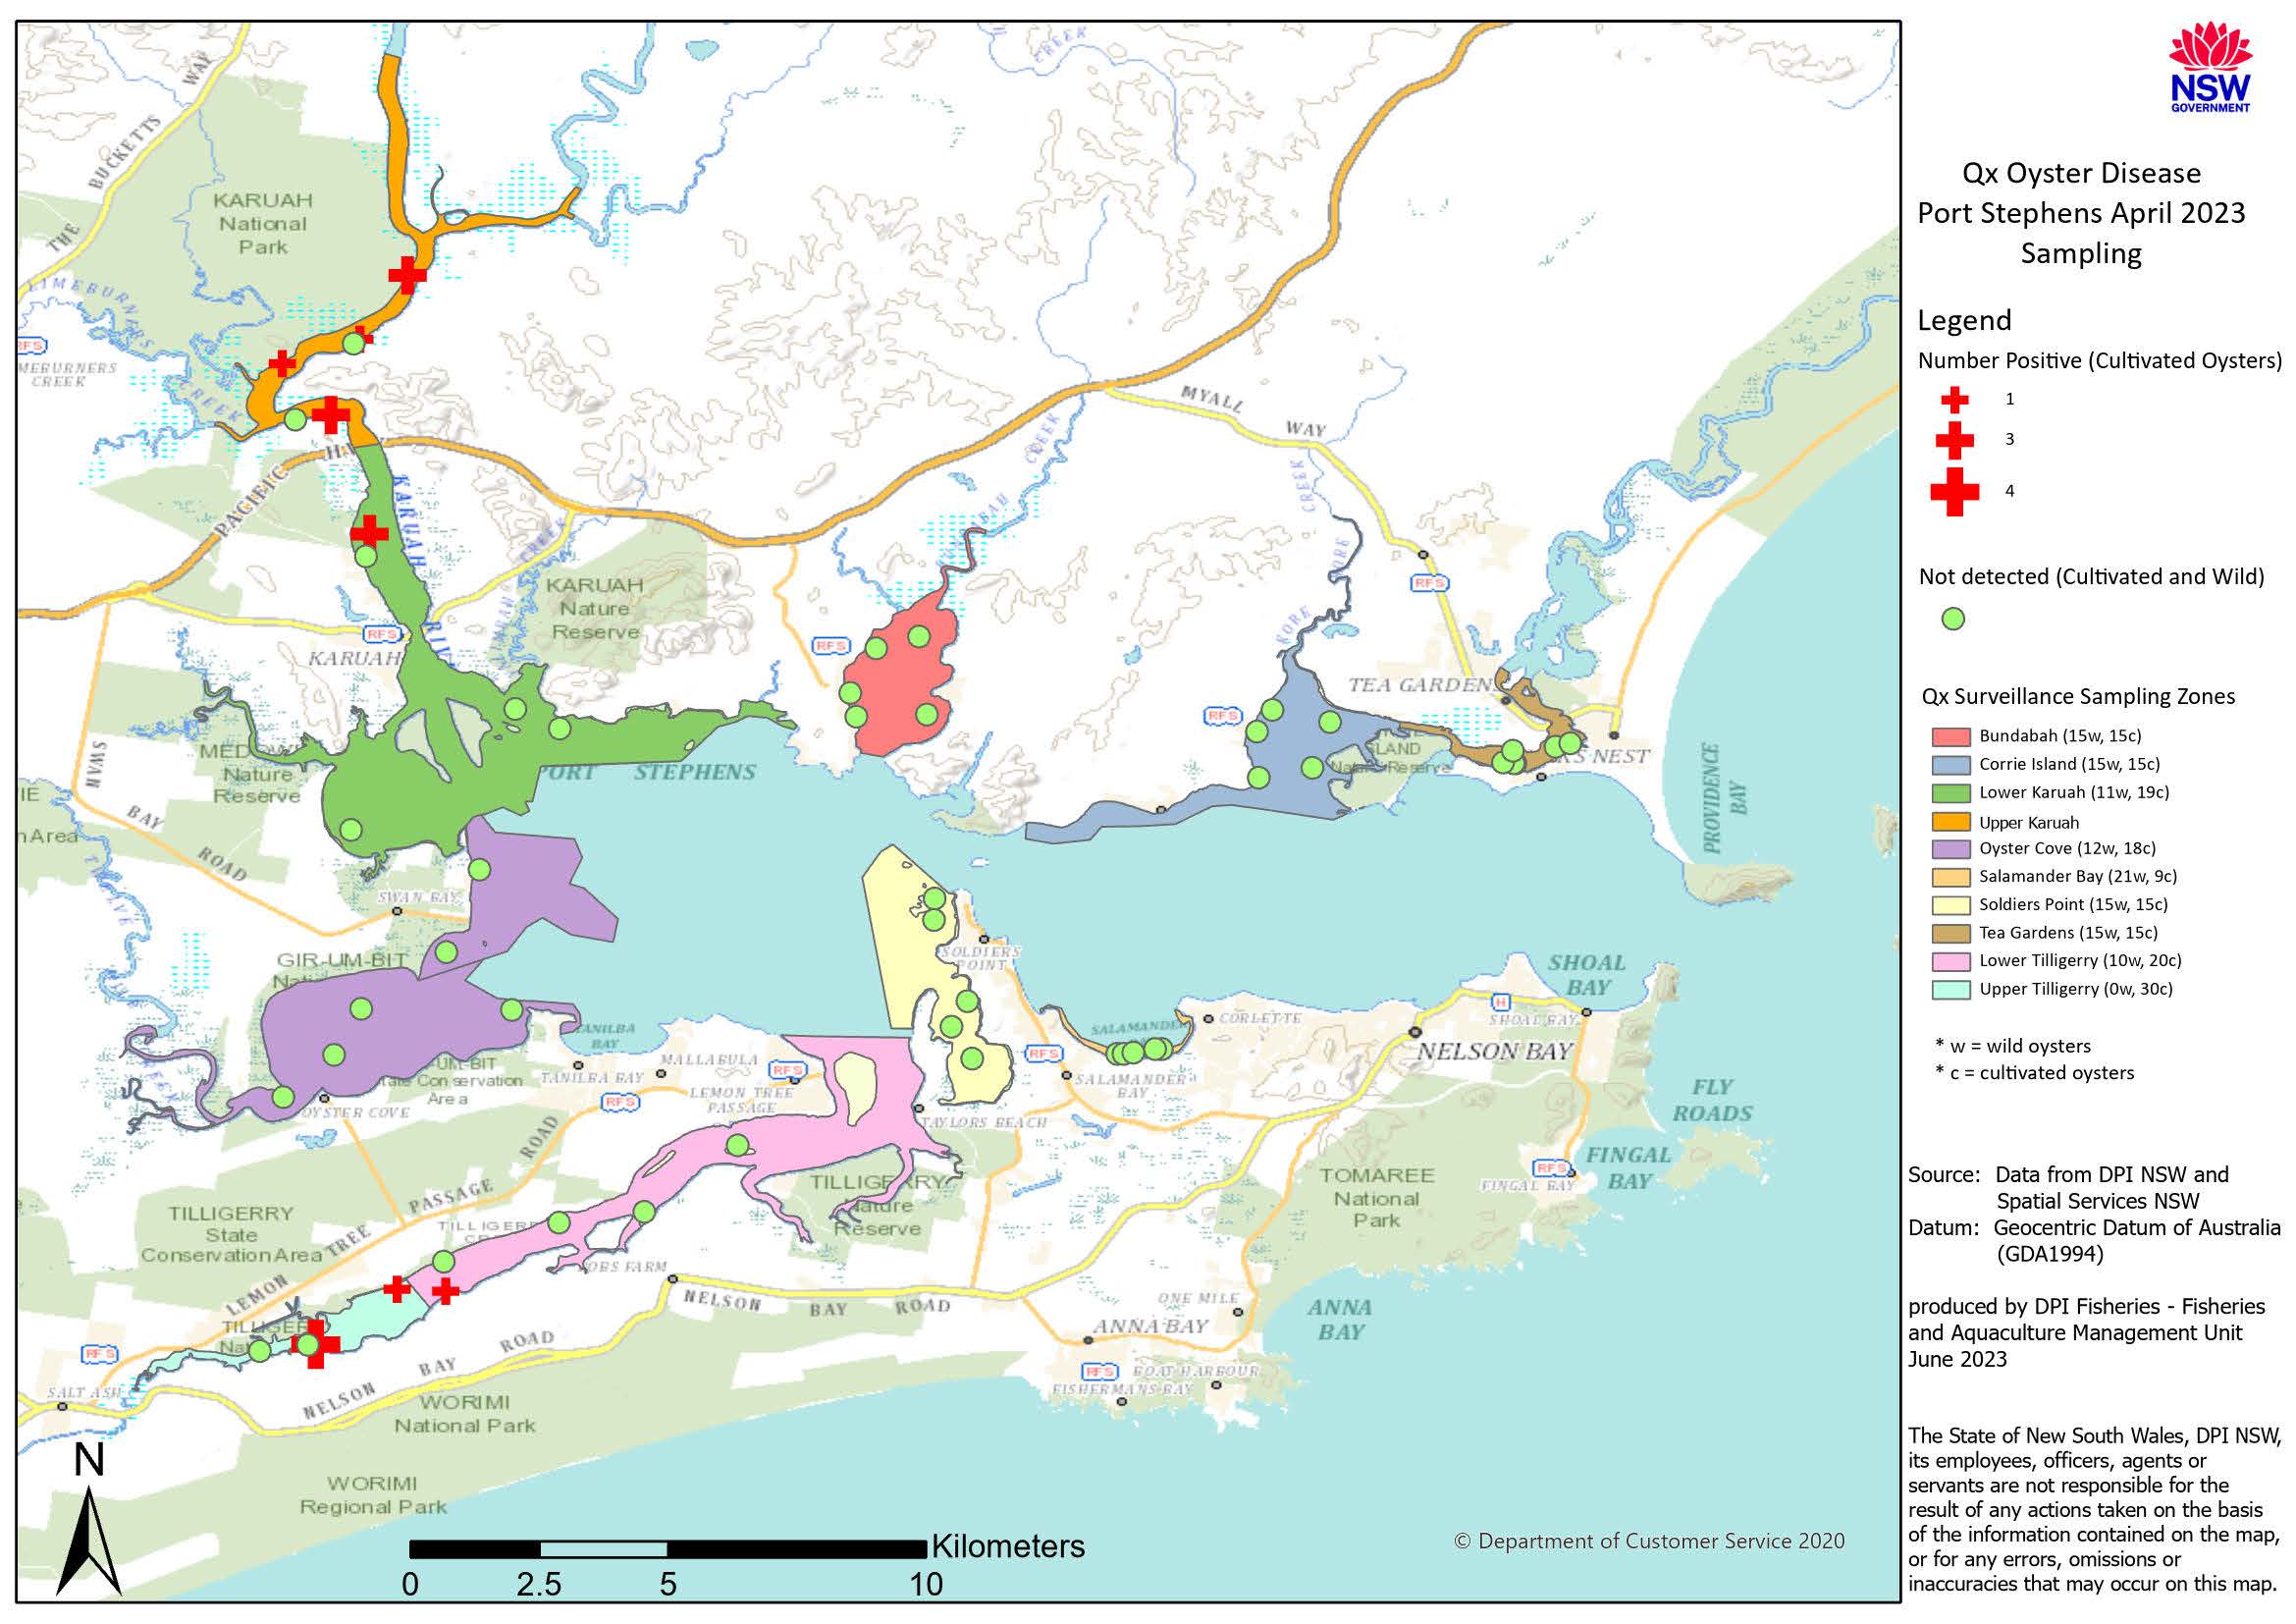 QX Oyster Disease Port Stephens April 2023 sampling map